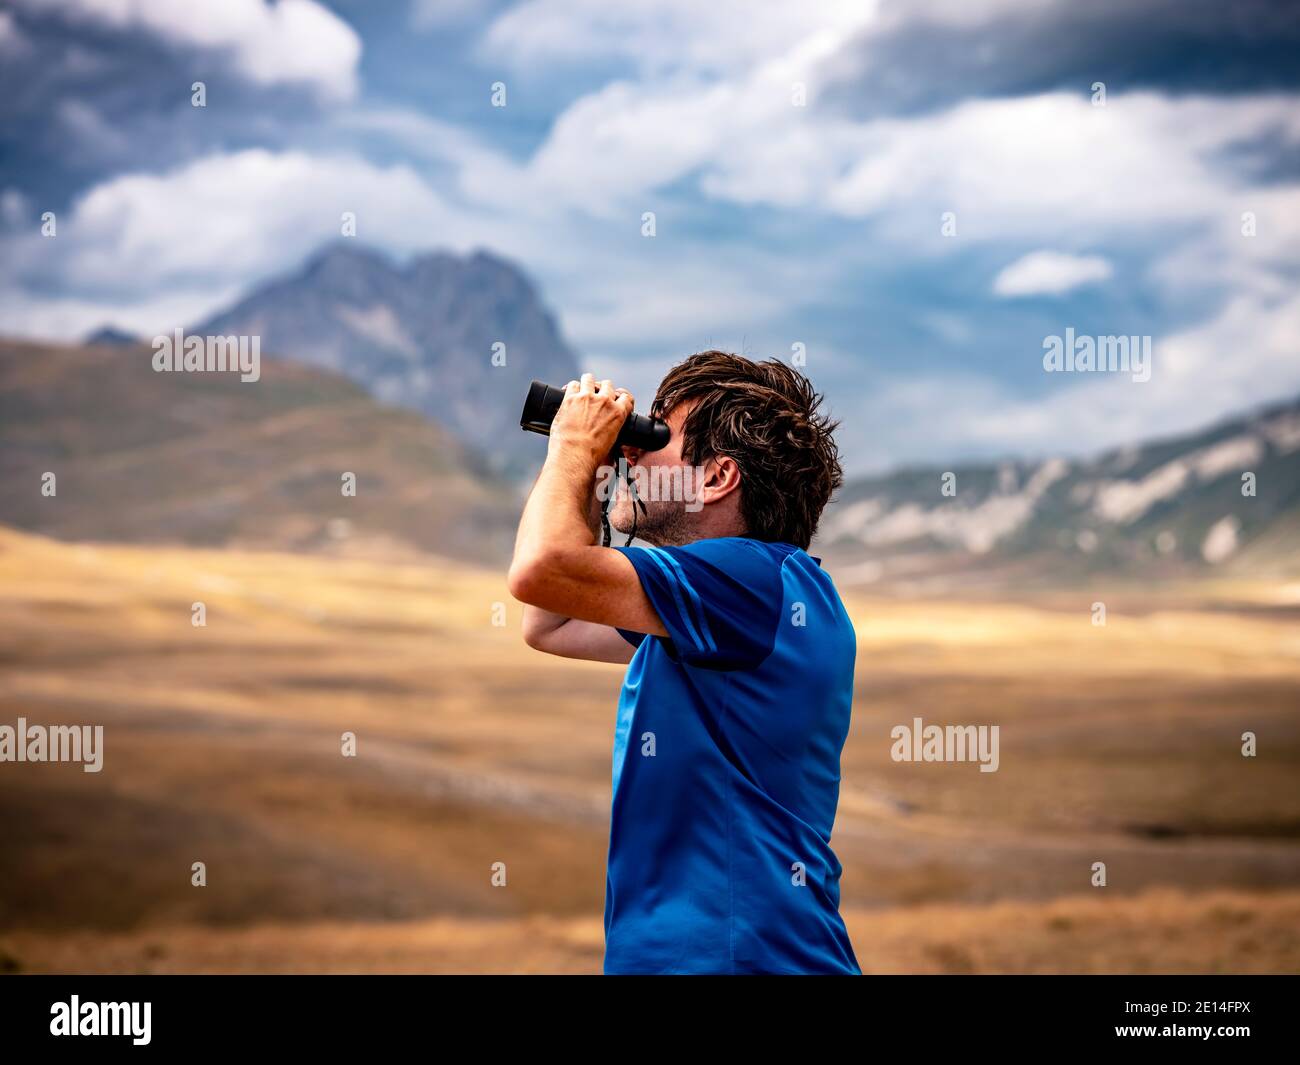 Man scanning the sky with binoculars Stock Photo